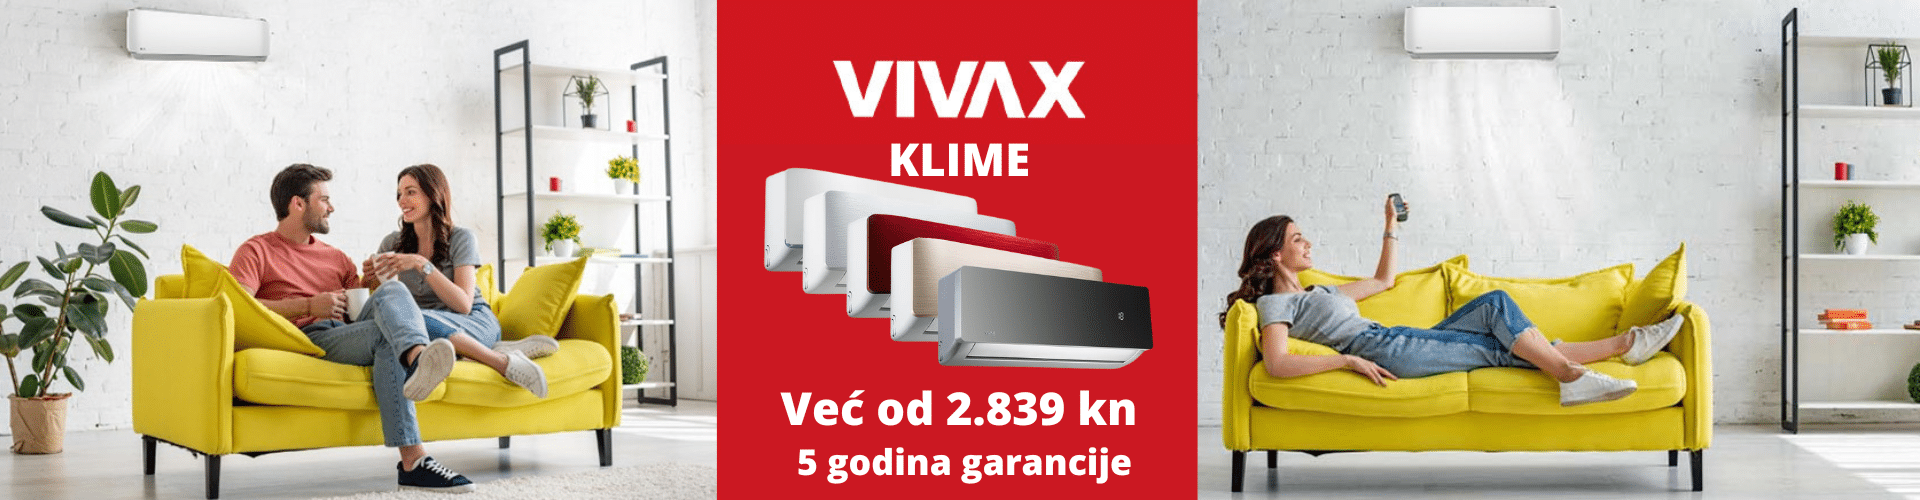 vivax klime